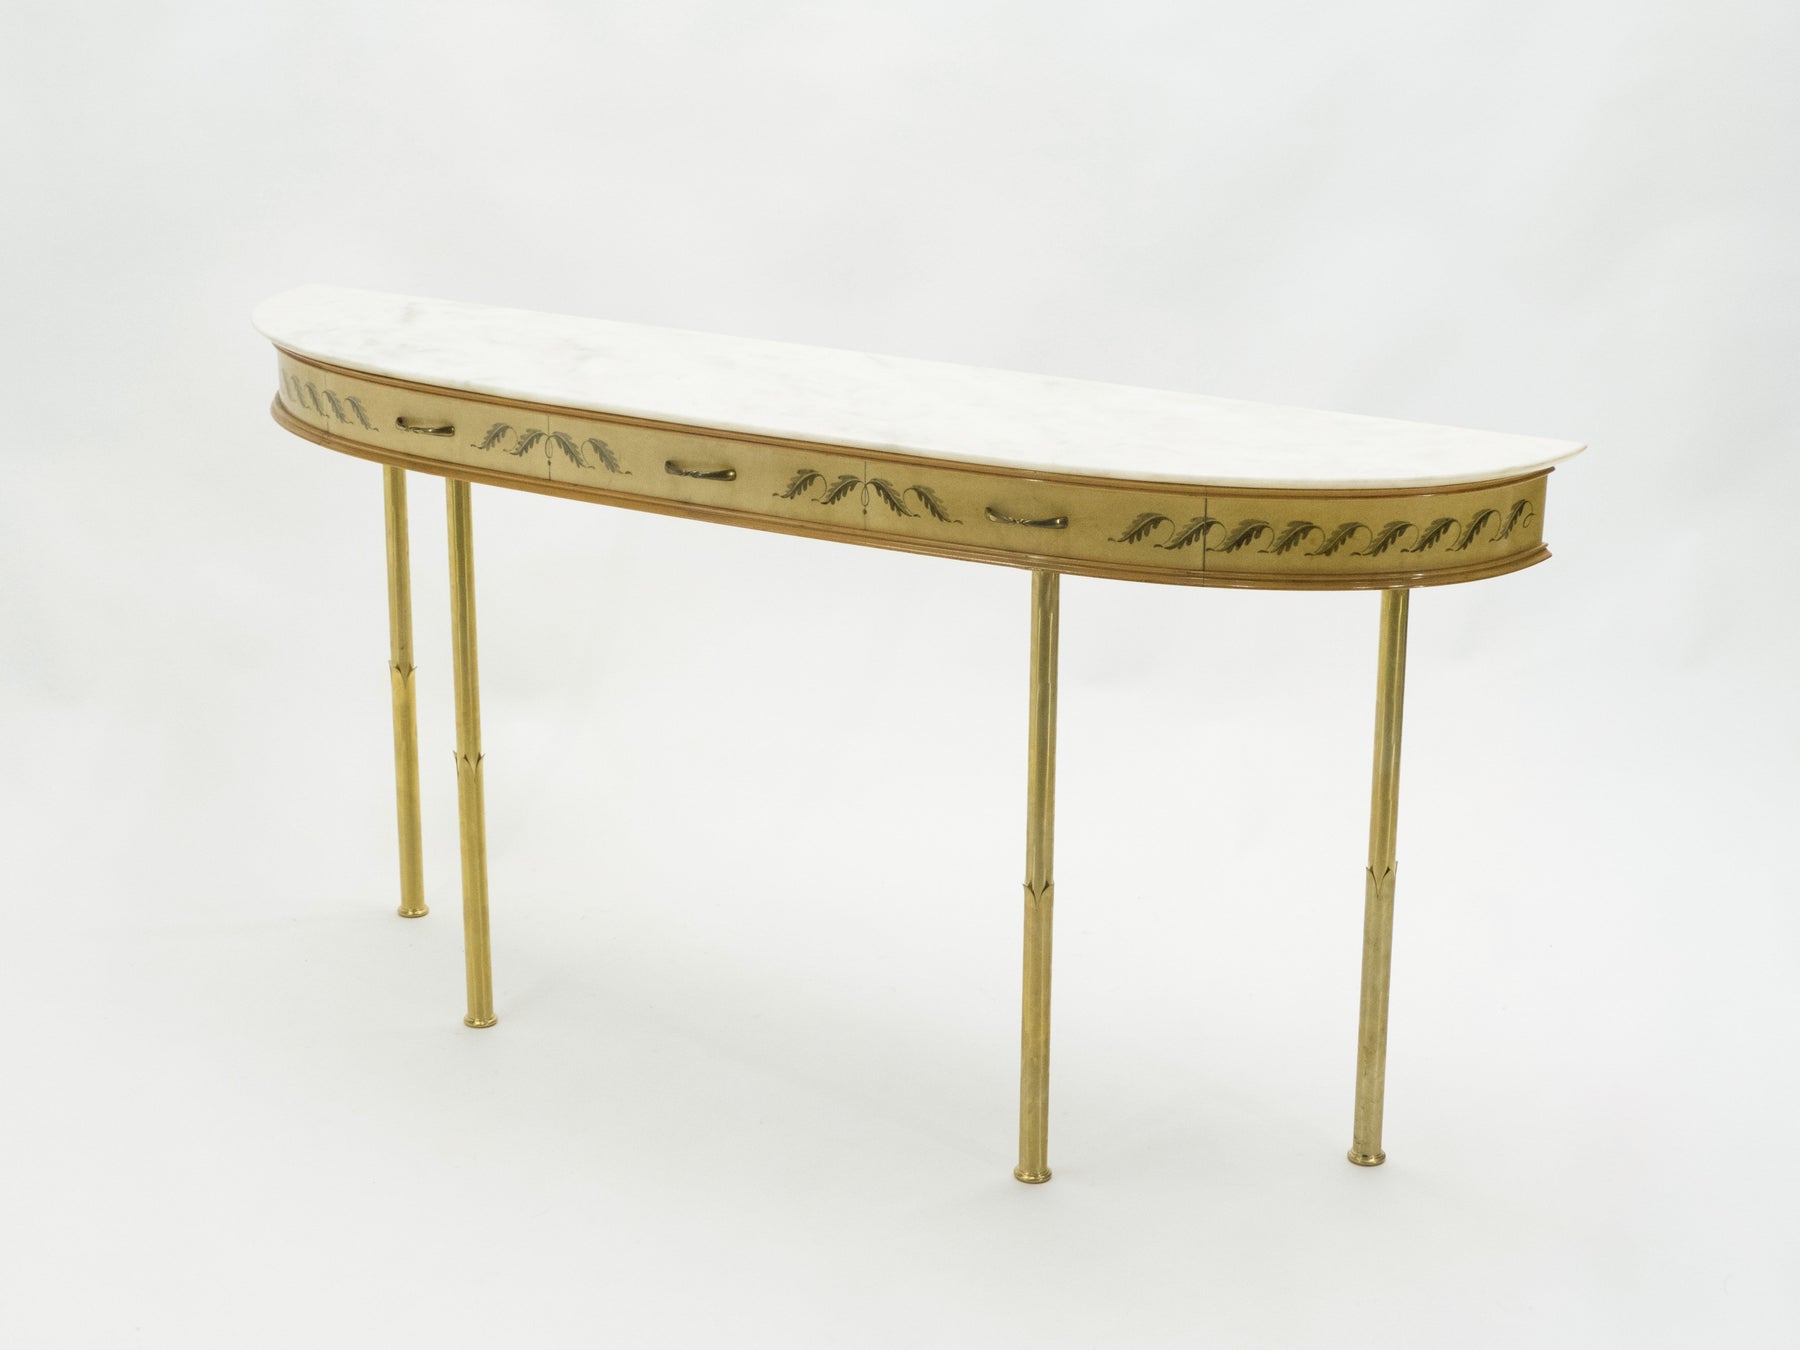 Unique Italian brass goatskin marble console table by Giuseppe Anzani 1950s